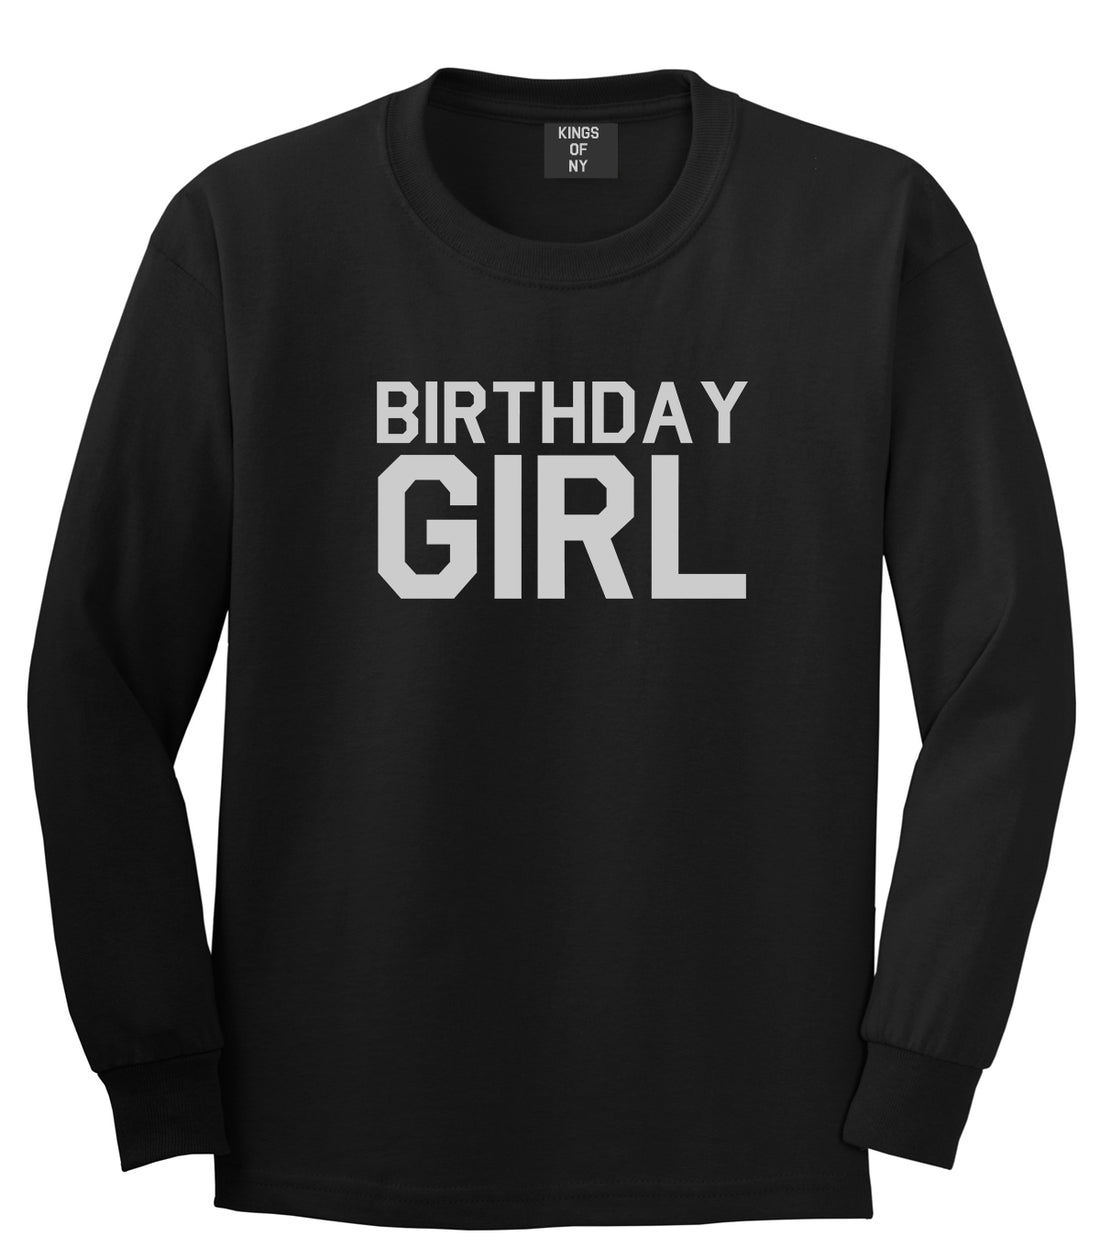 Birthday Girl Black Long Sleeve T-Shirt by Kings Of NY